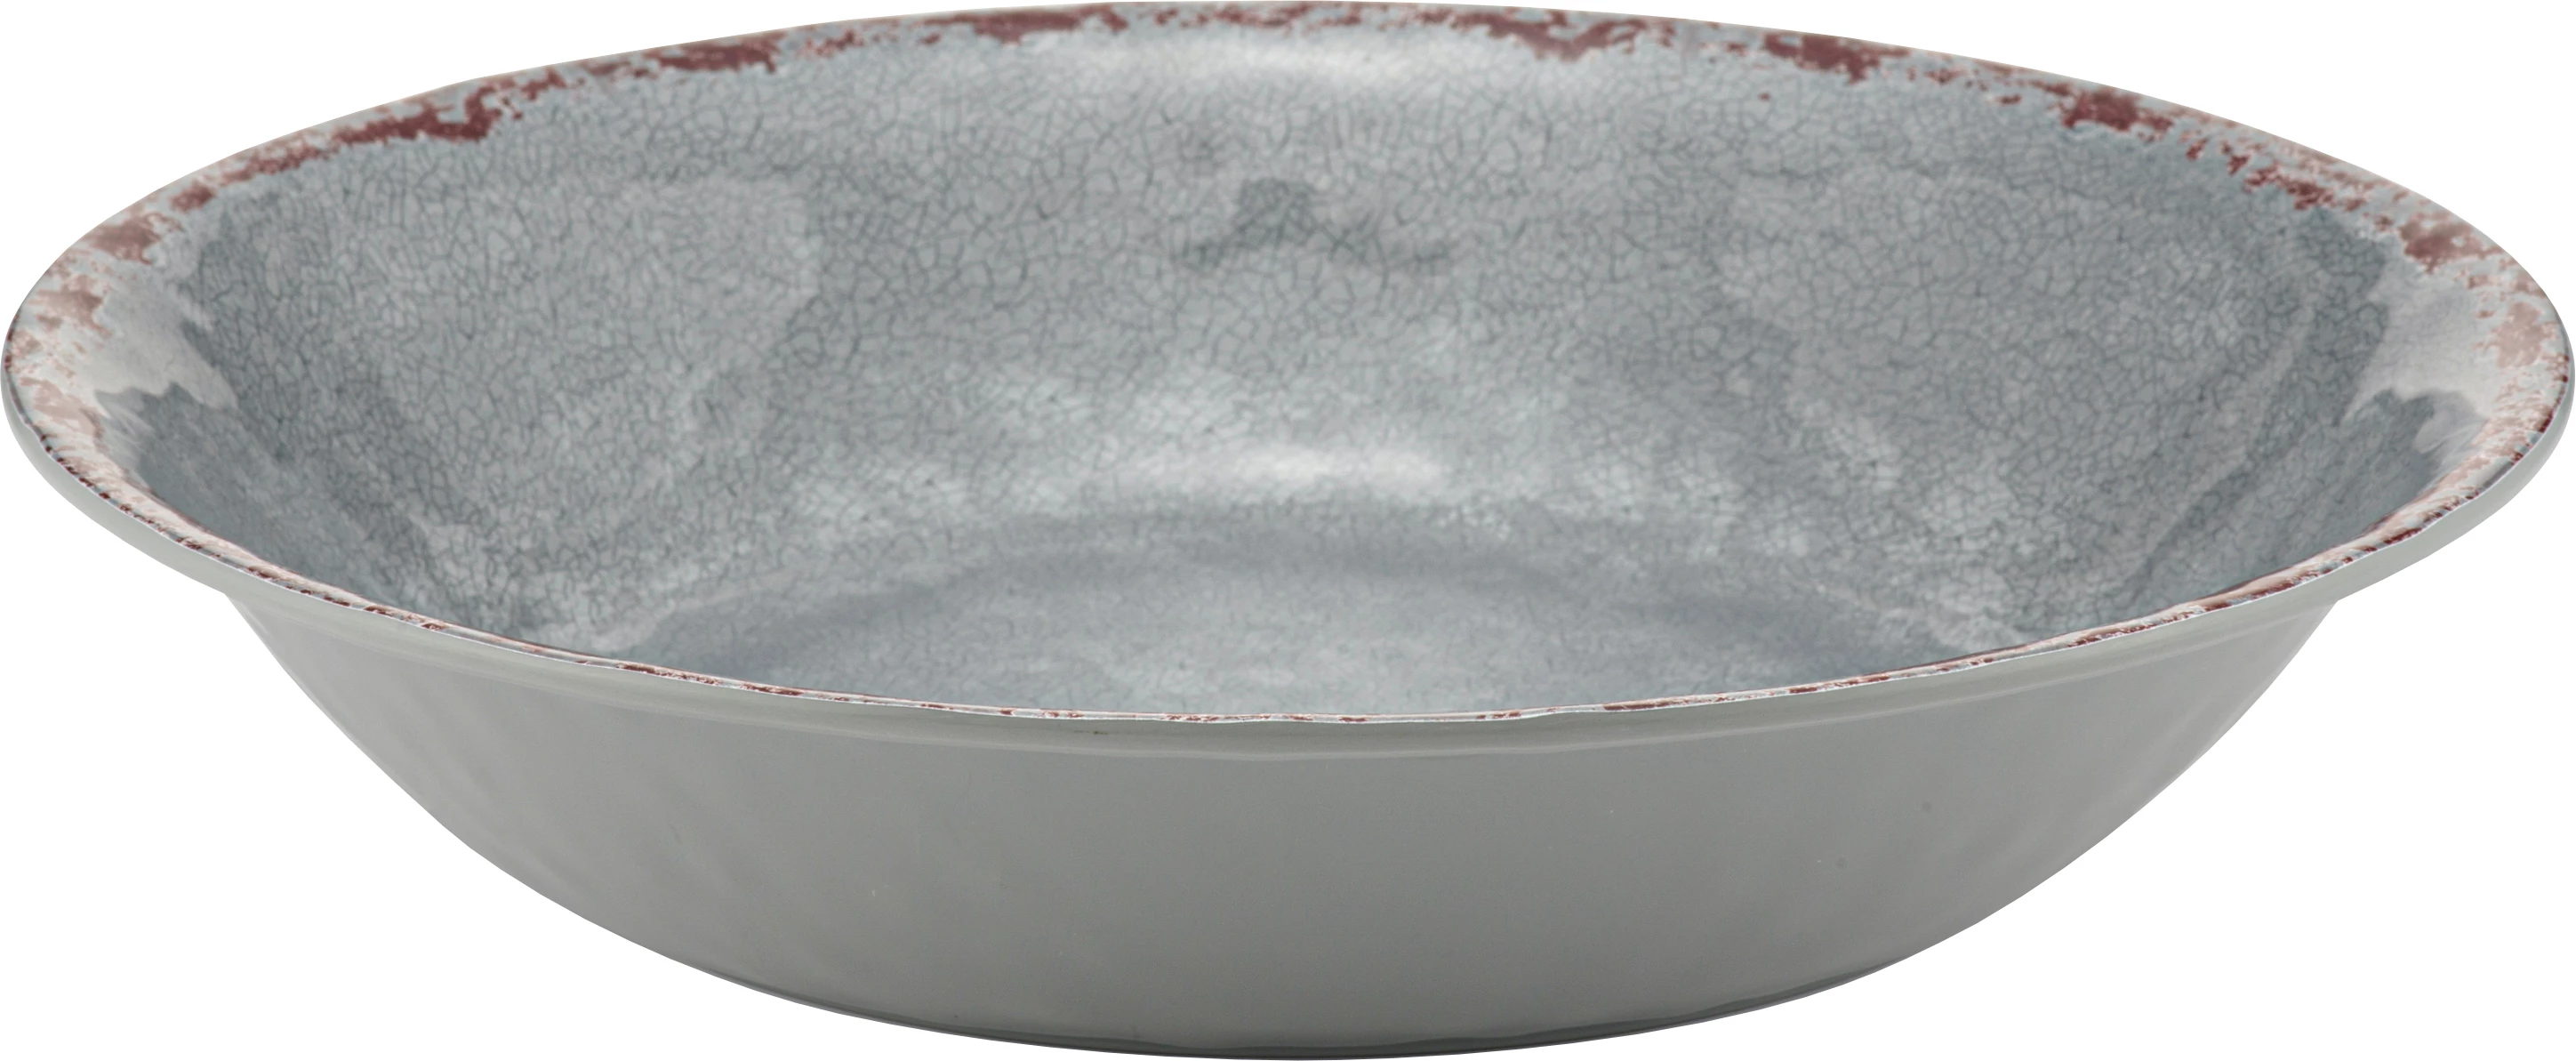 Dalebrook Casablanca skål, grå, 350 cl, ø35 cm